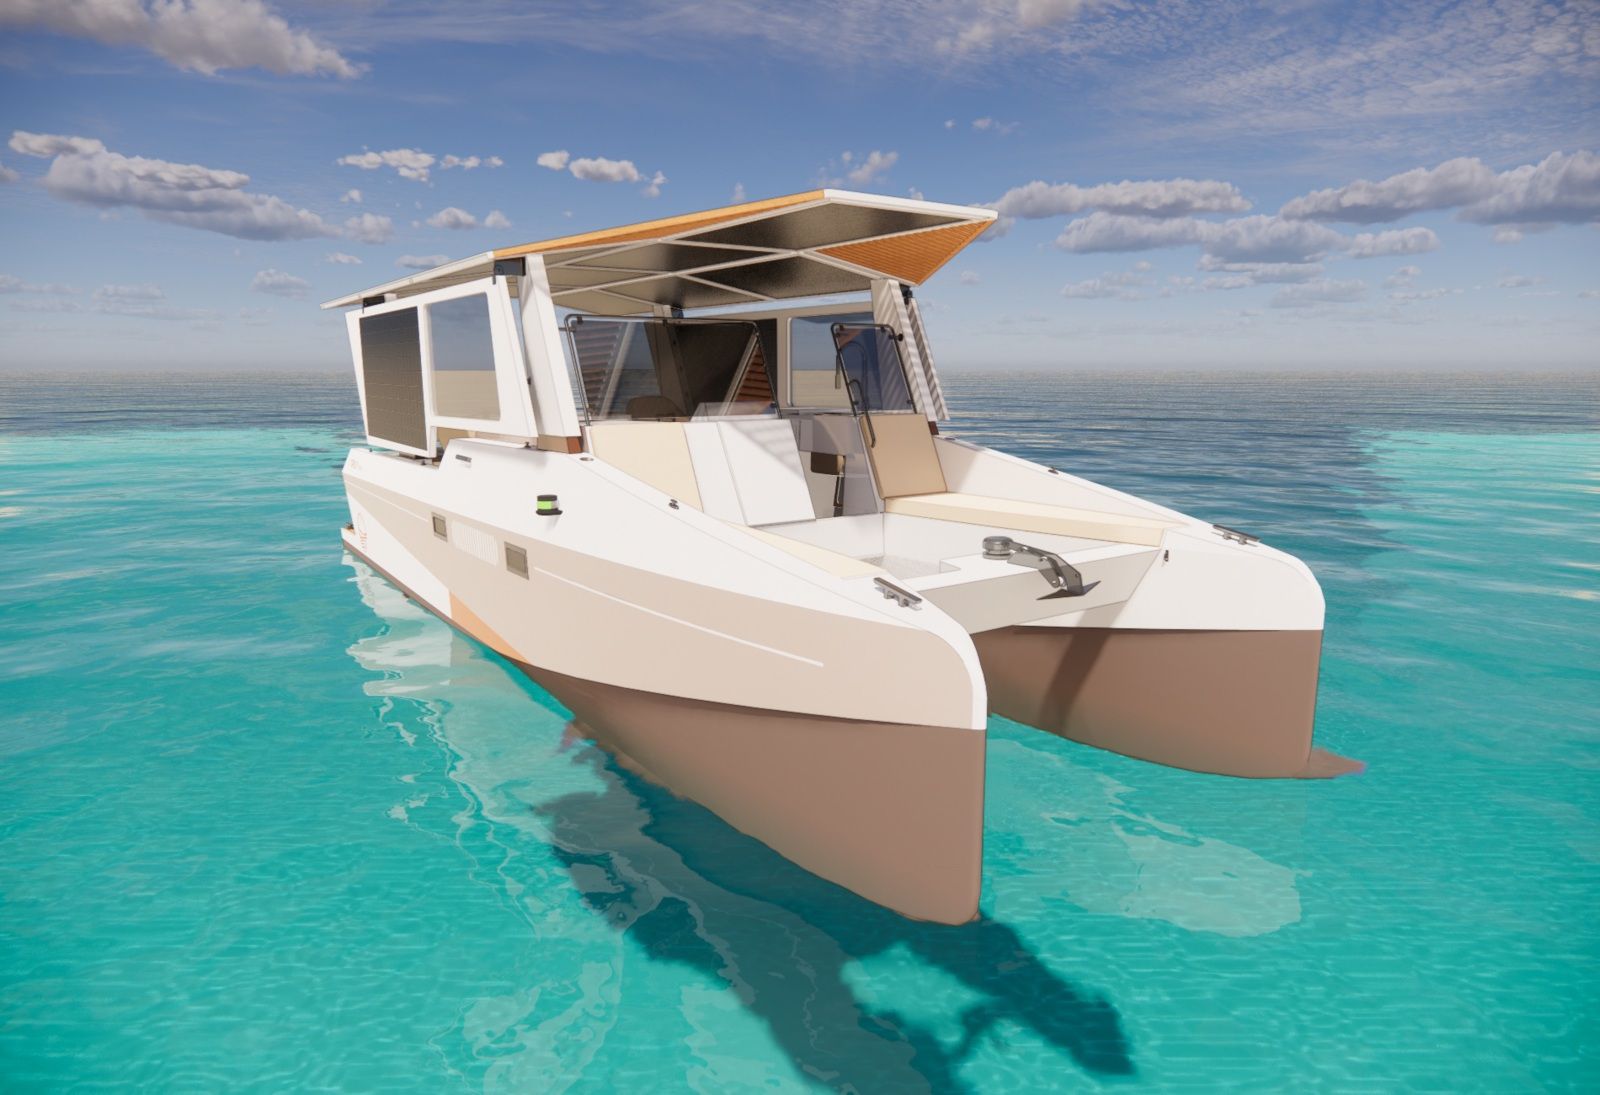 To Millikan Boats M9 κινείται αυστηρά με ηλιακή ενέργεια